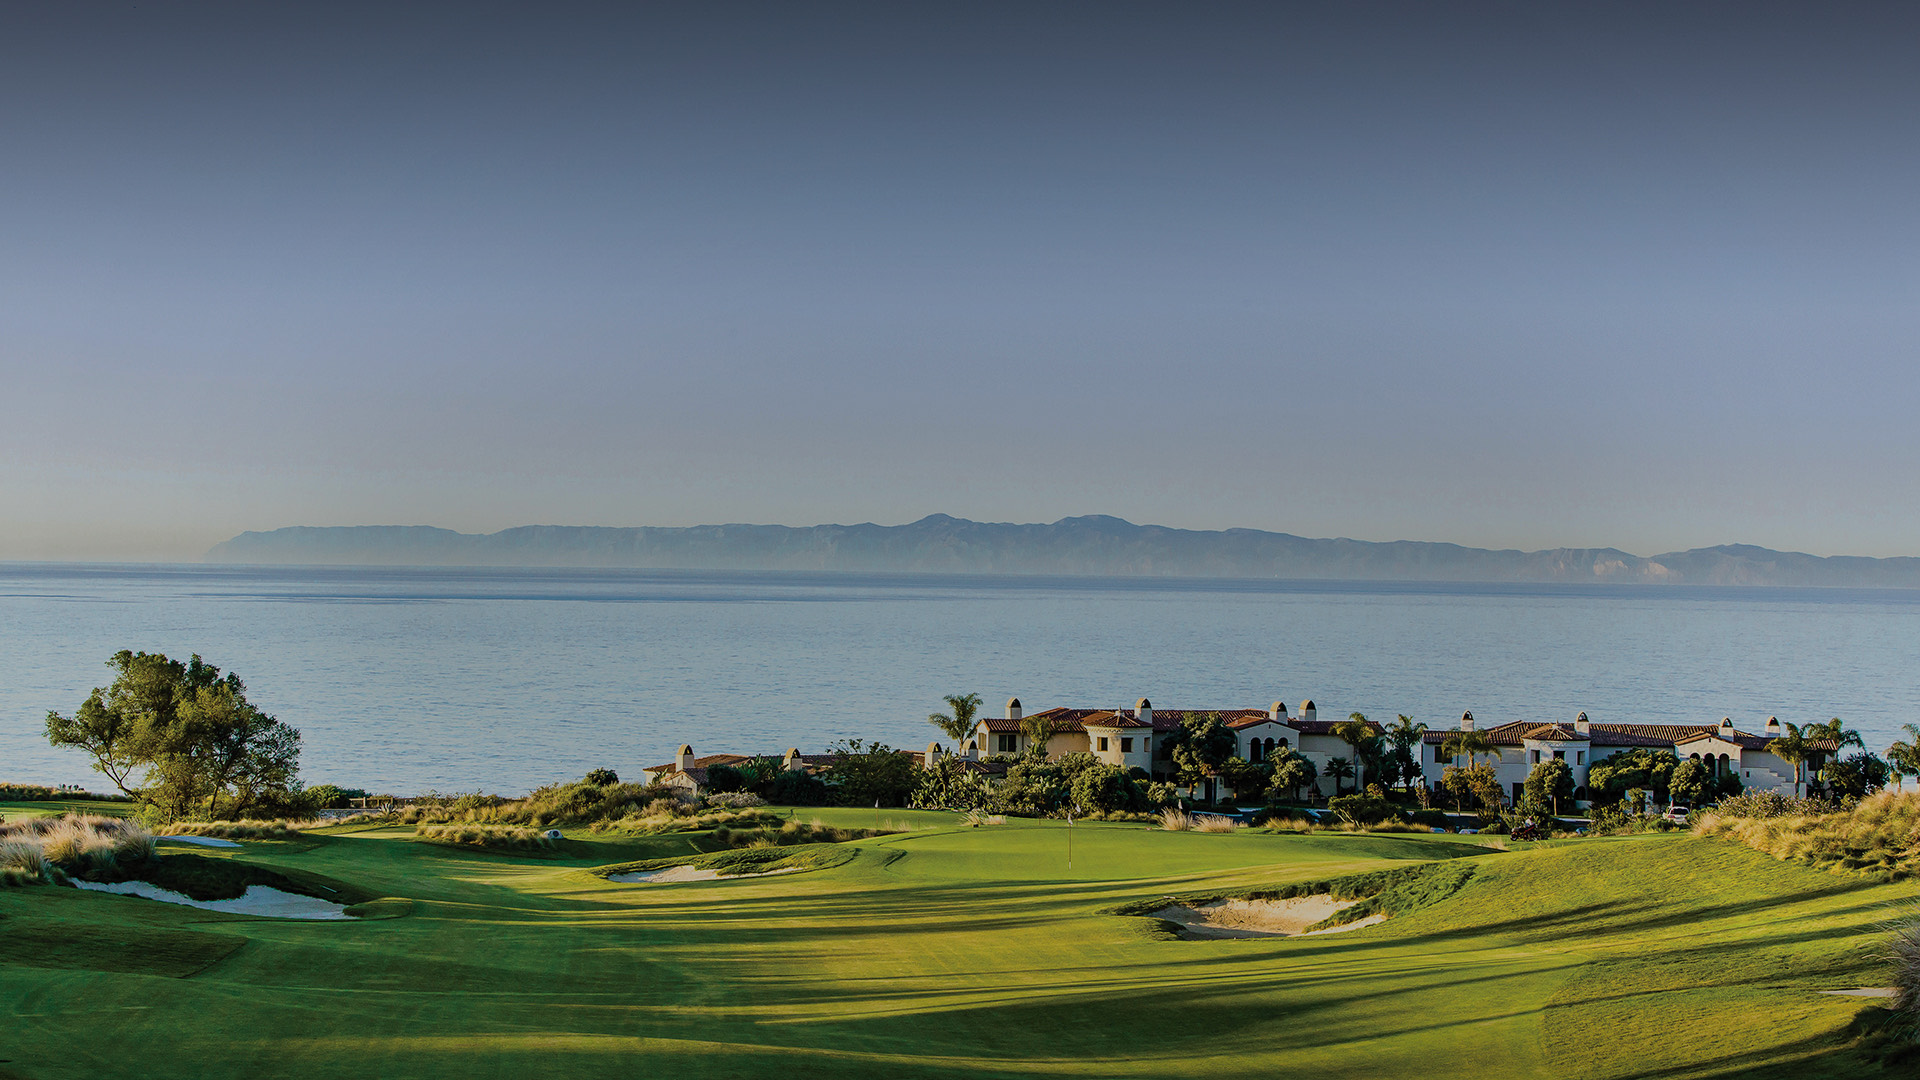 Lovely golf course overlooking a calm ocean